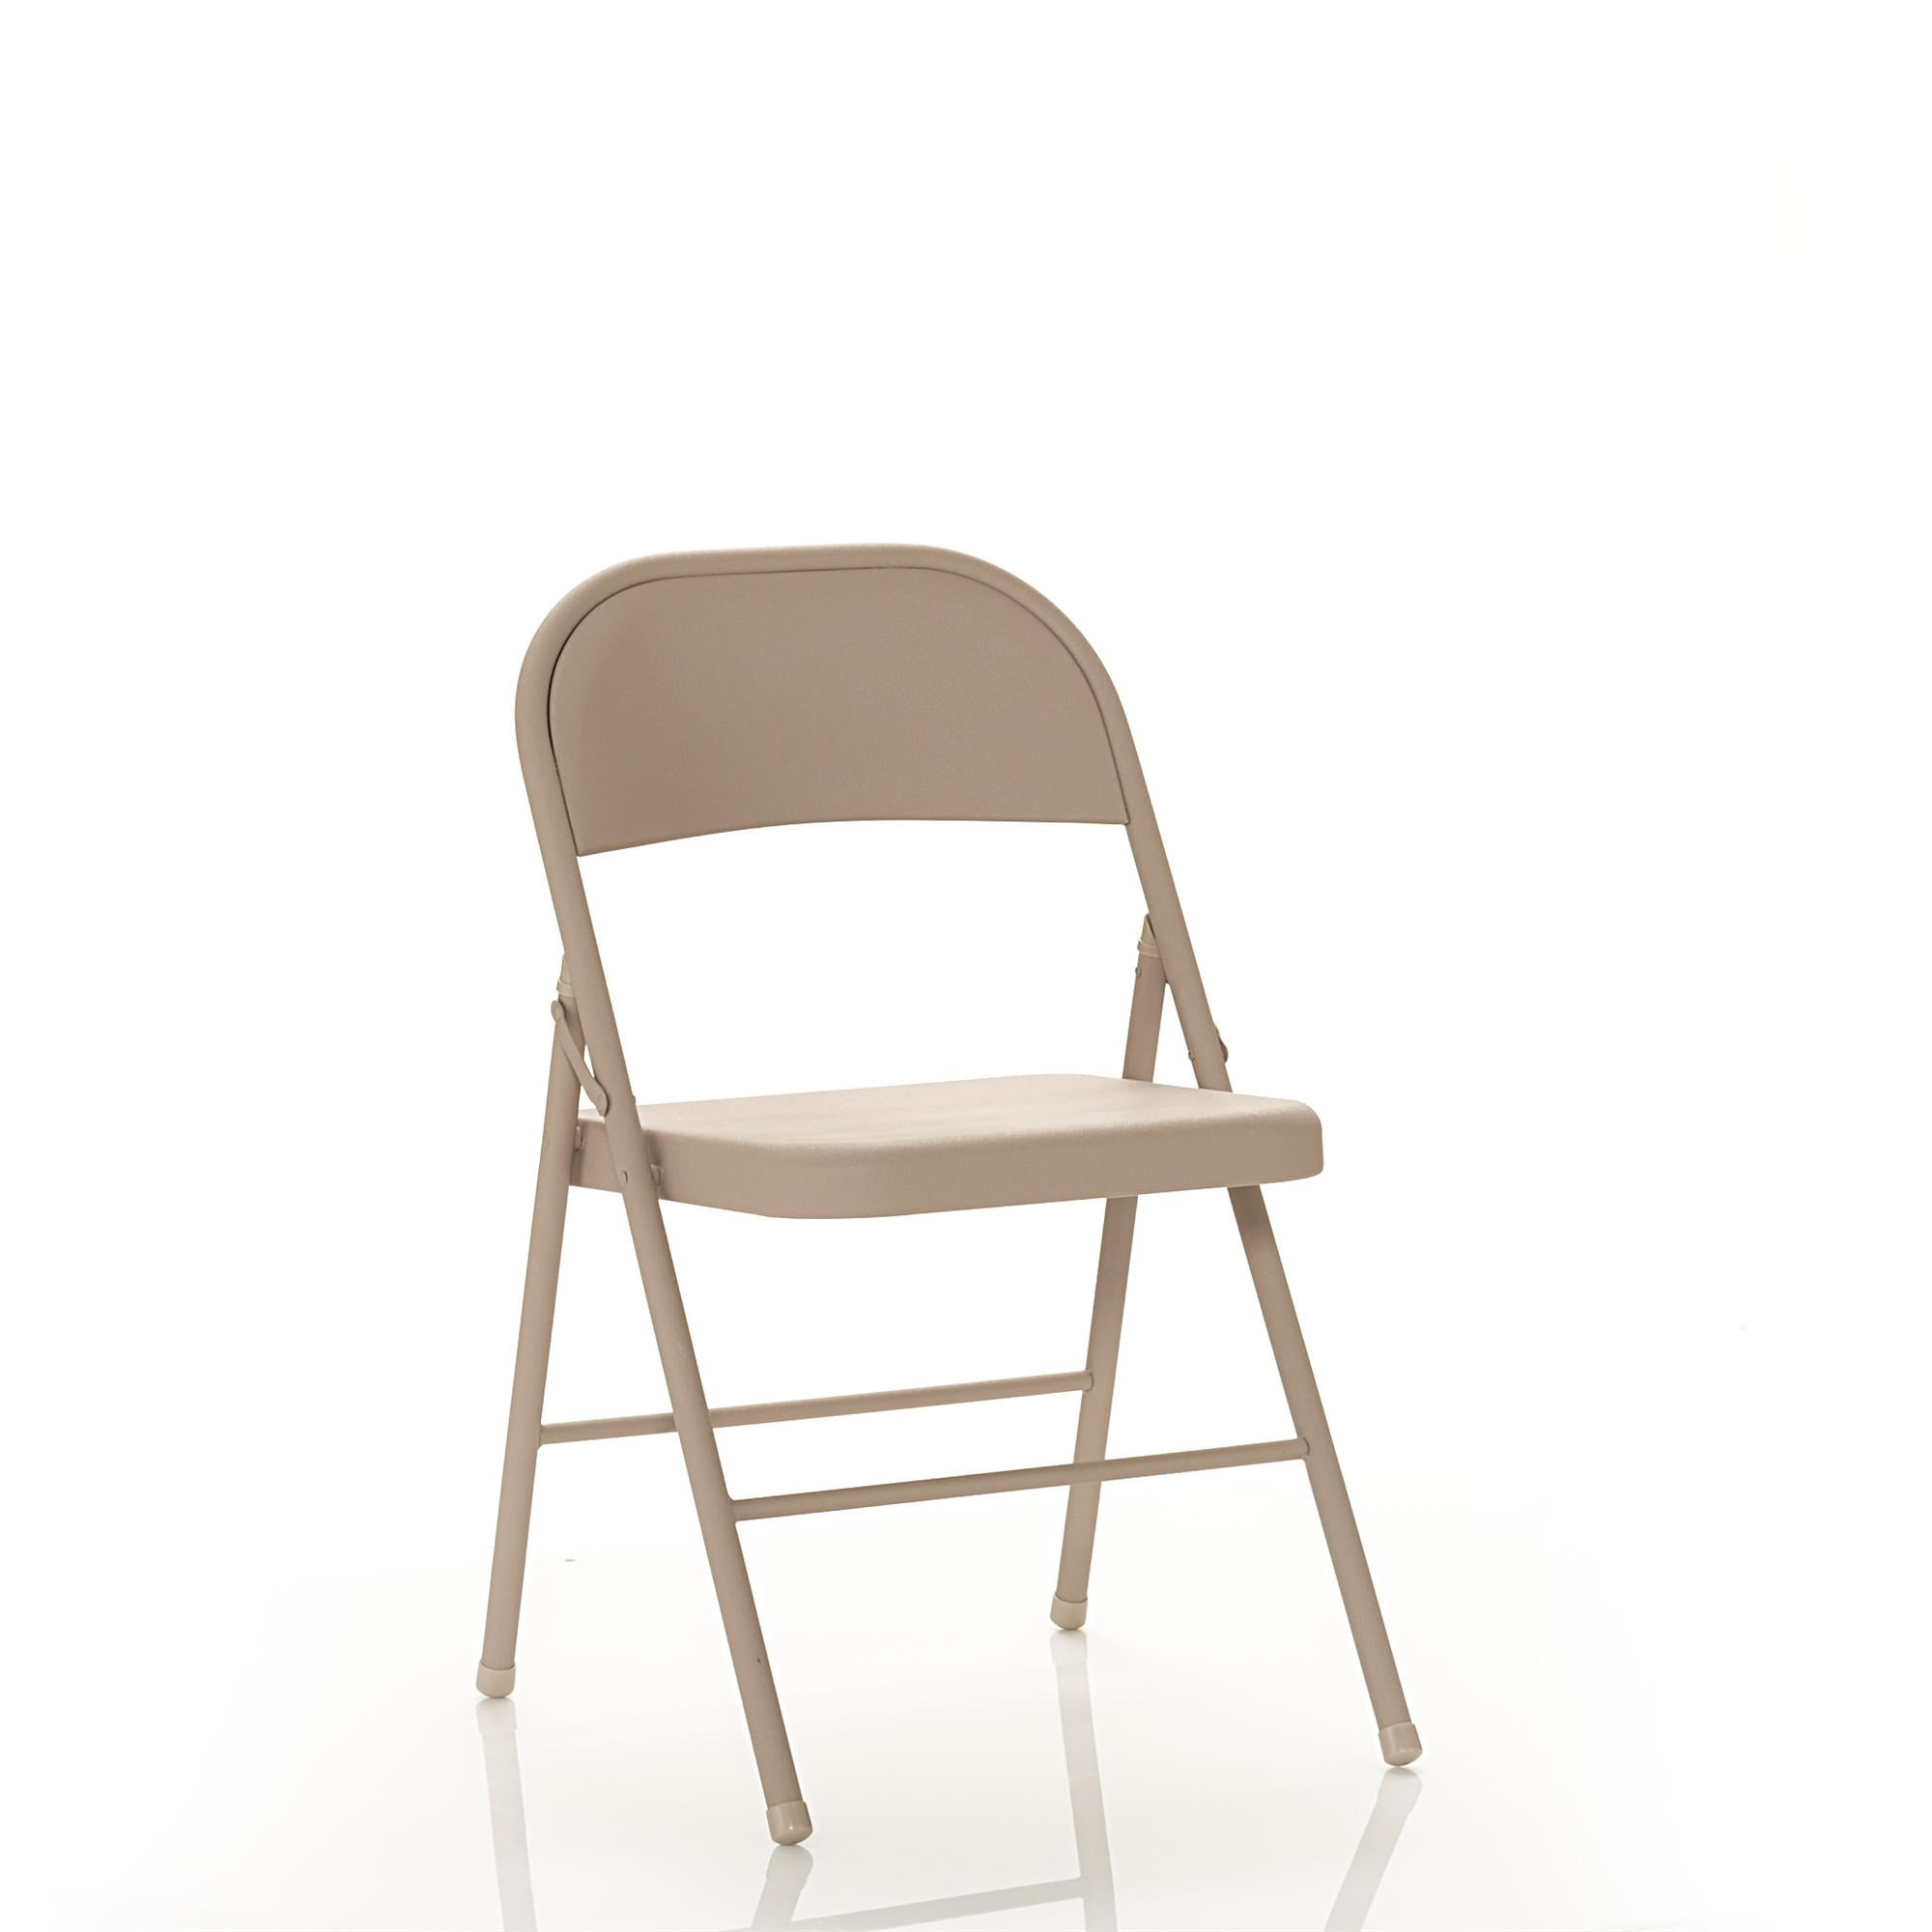 Mainstays All-Steel Metal Folding Chair, Double Braced, Antique Linen